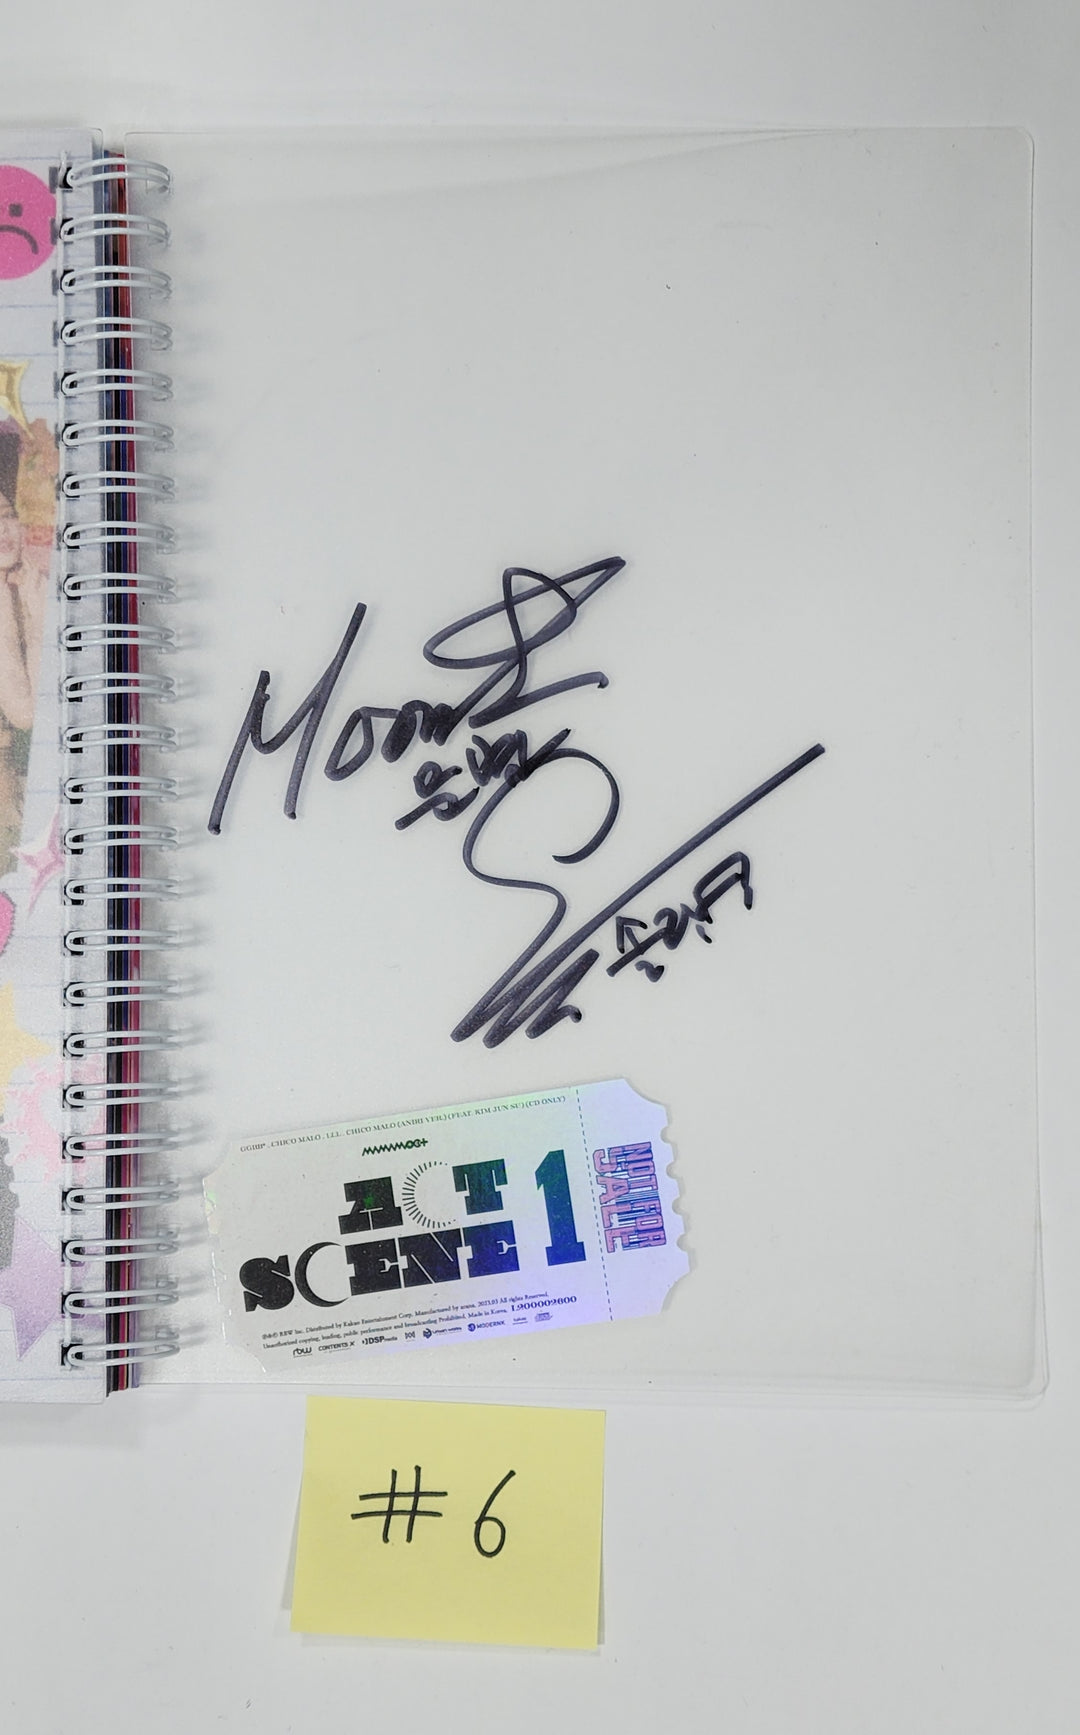 Mamamoo "ACT 1, SCENE 1" - Hand Autographed(Signed) Promo Album